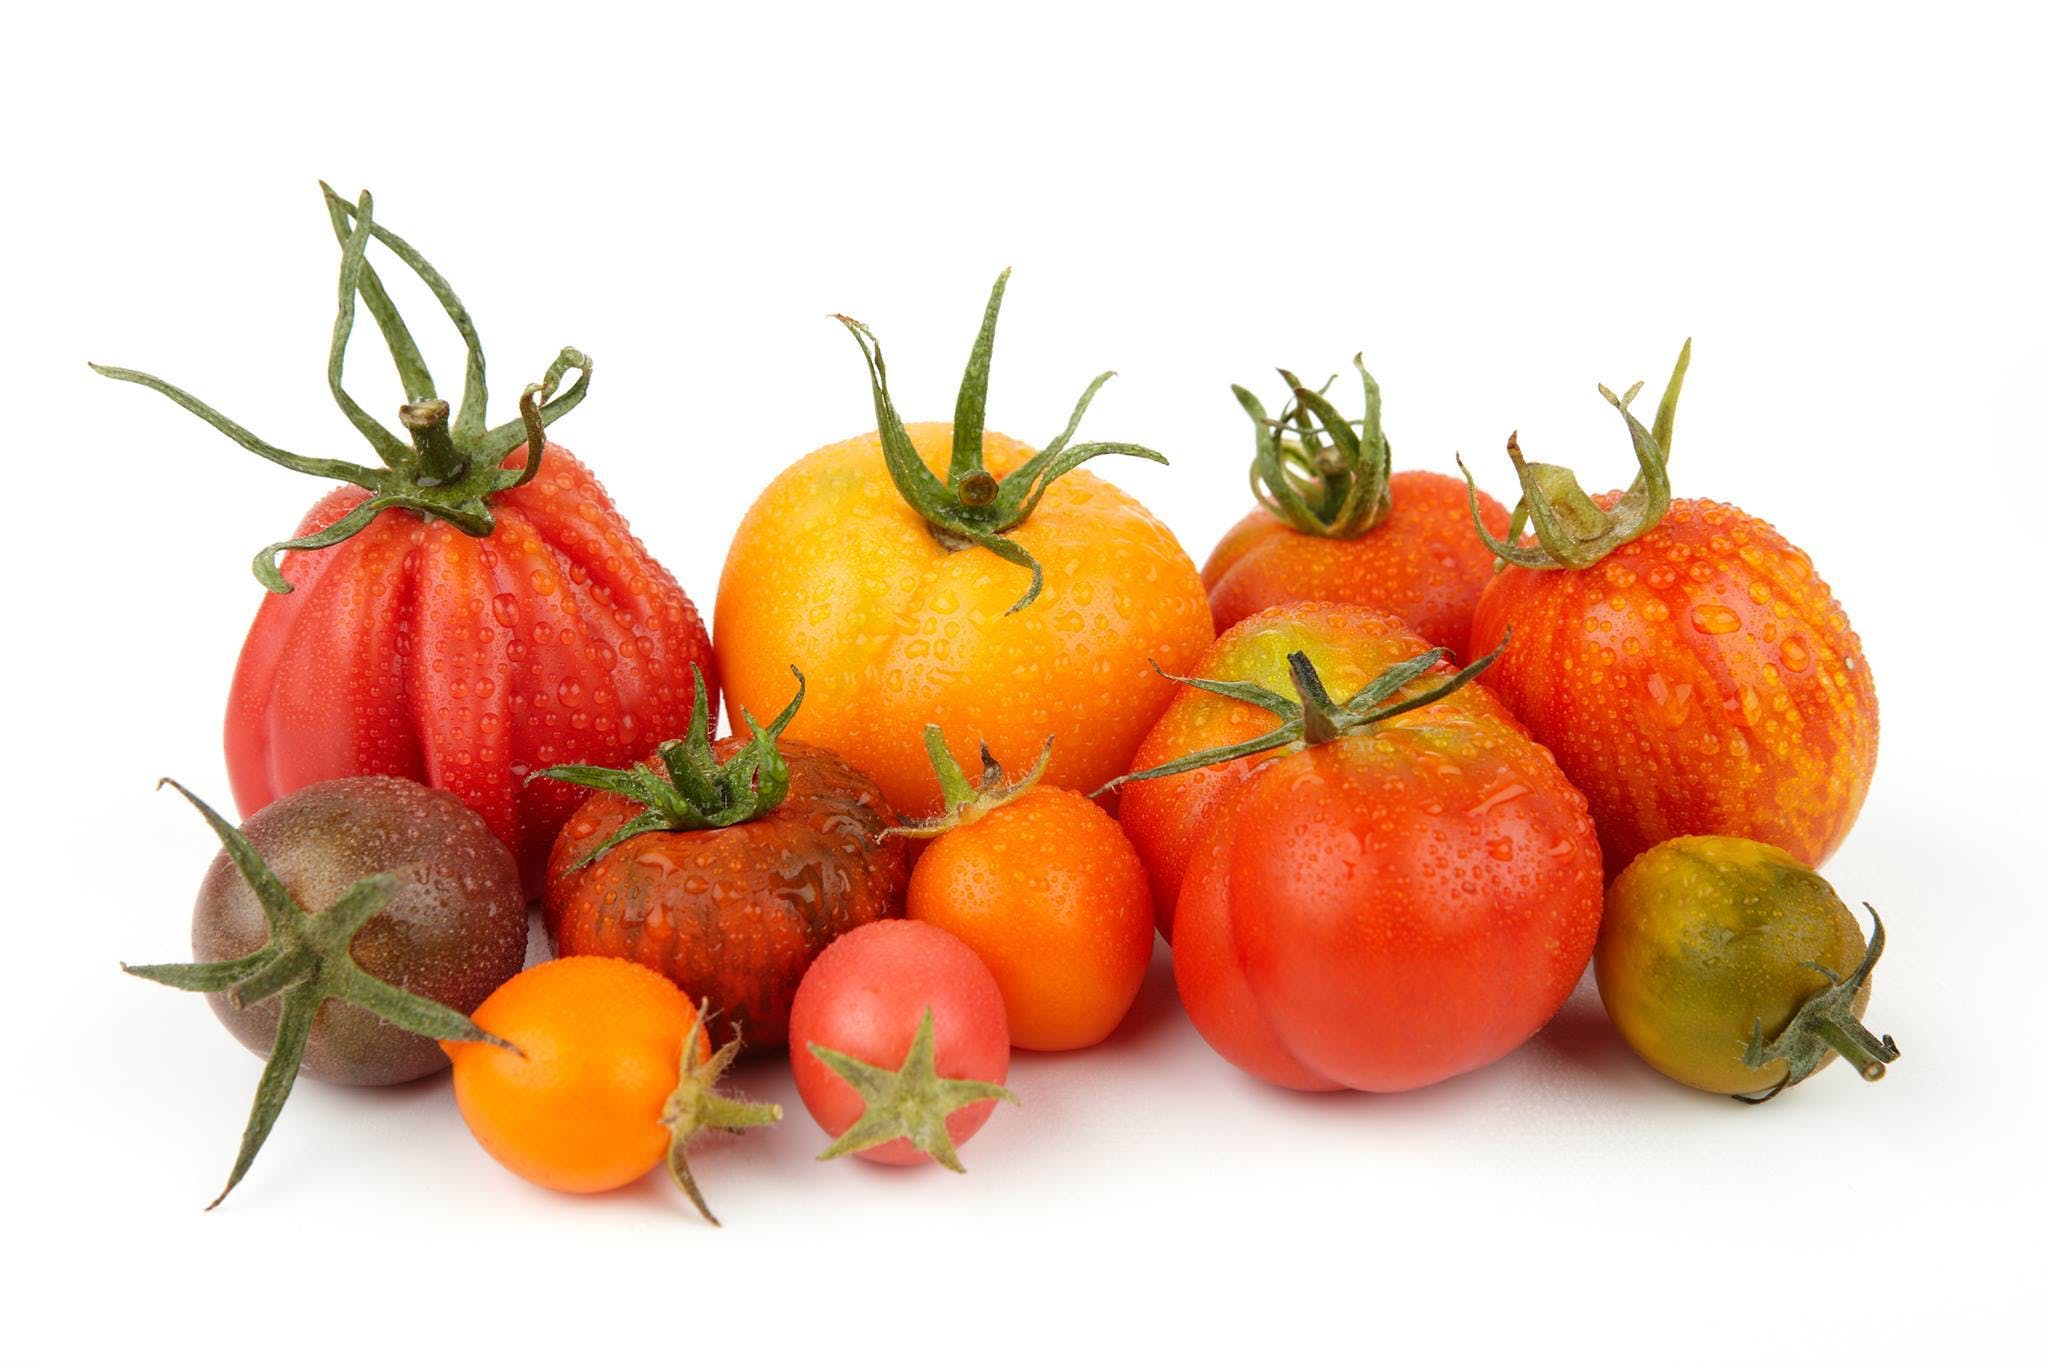 Natural foods,Vegetable,Local food,Fruit,Food,Whole food,Solanum,Tomato,Vegan nutrition,Plant